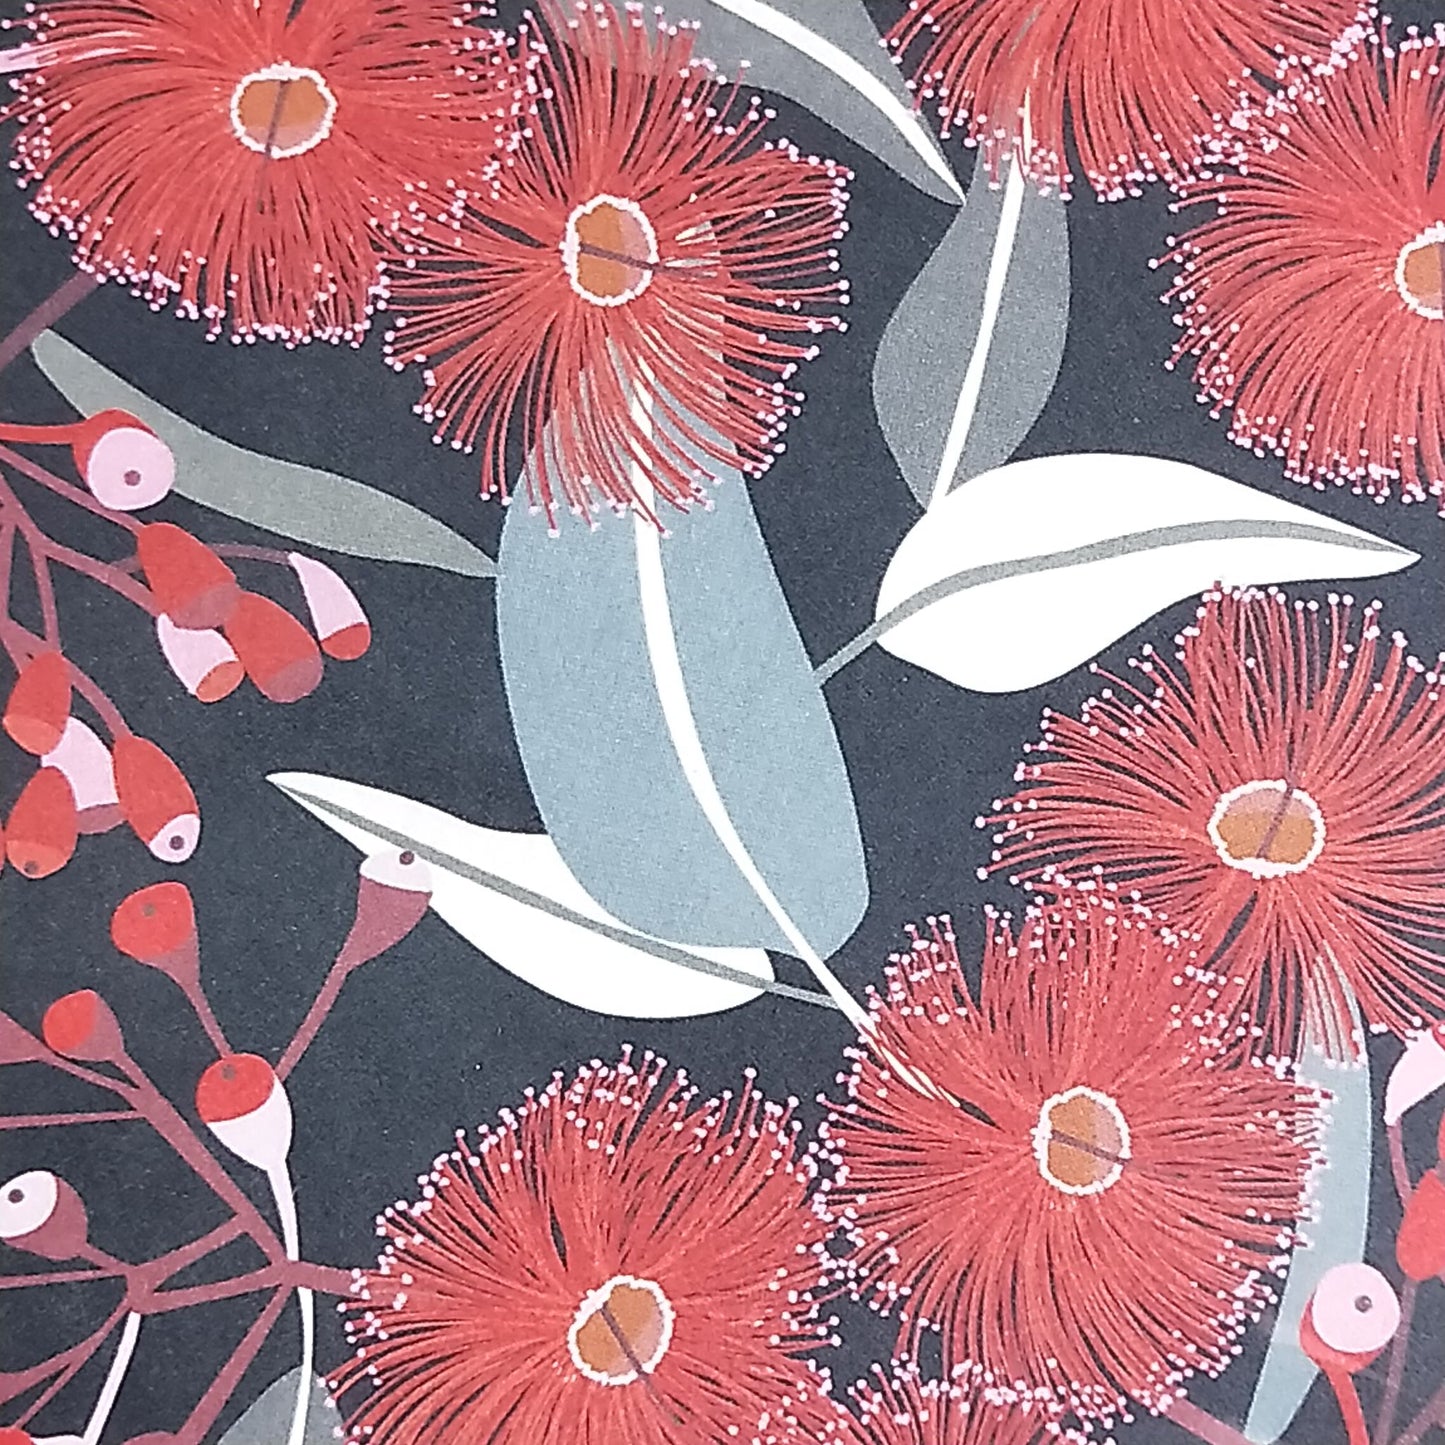 Wilddori 40 sheet Blank Insert - Gum Blossoms and Leaves